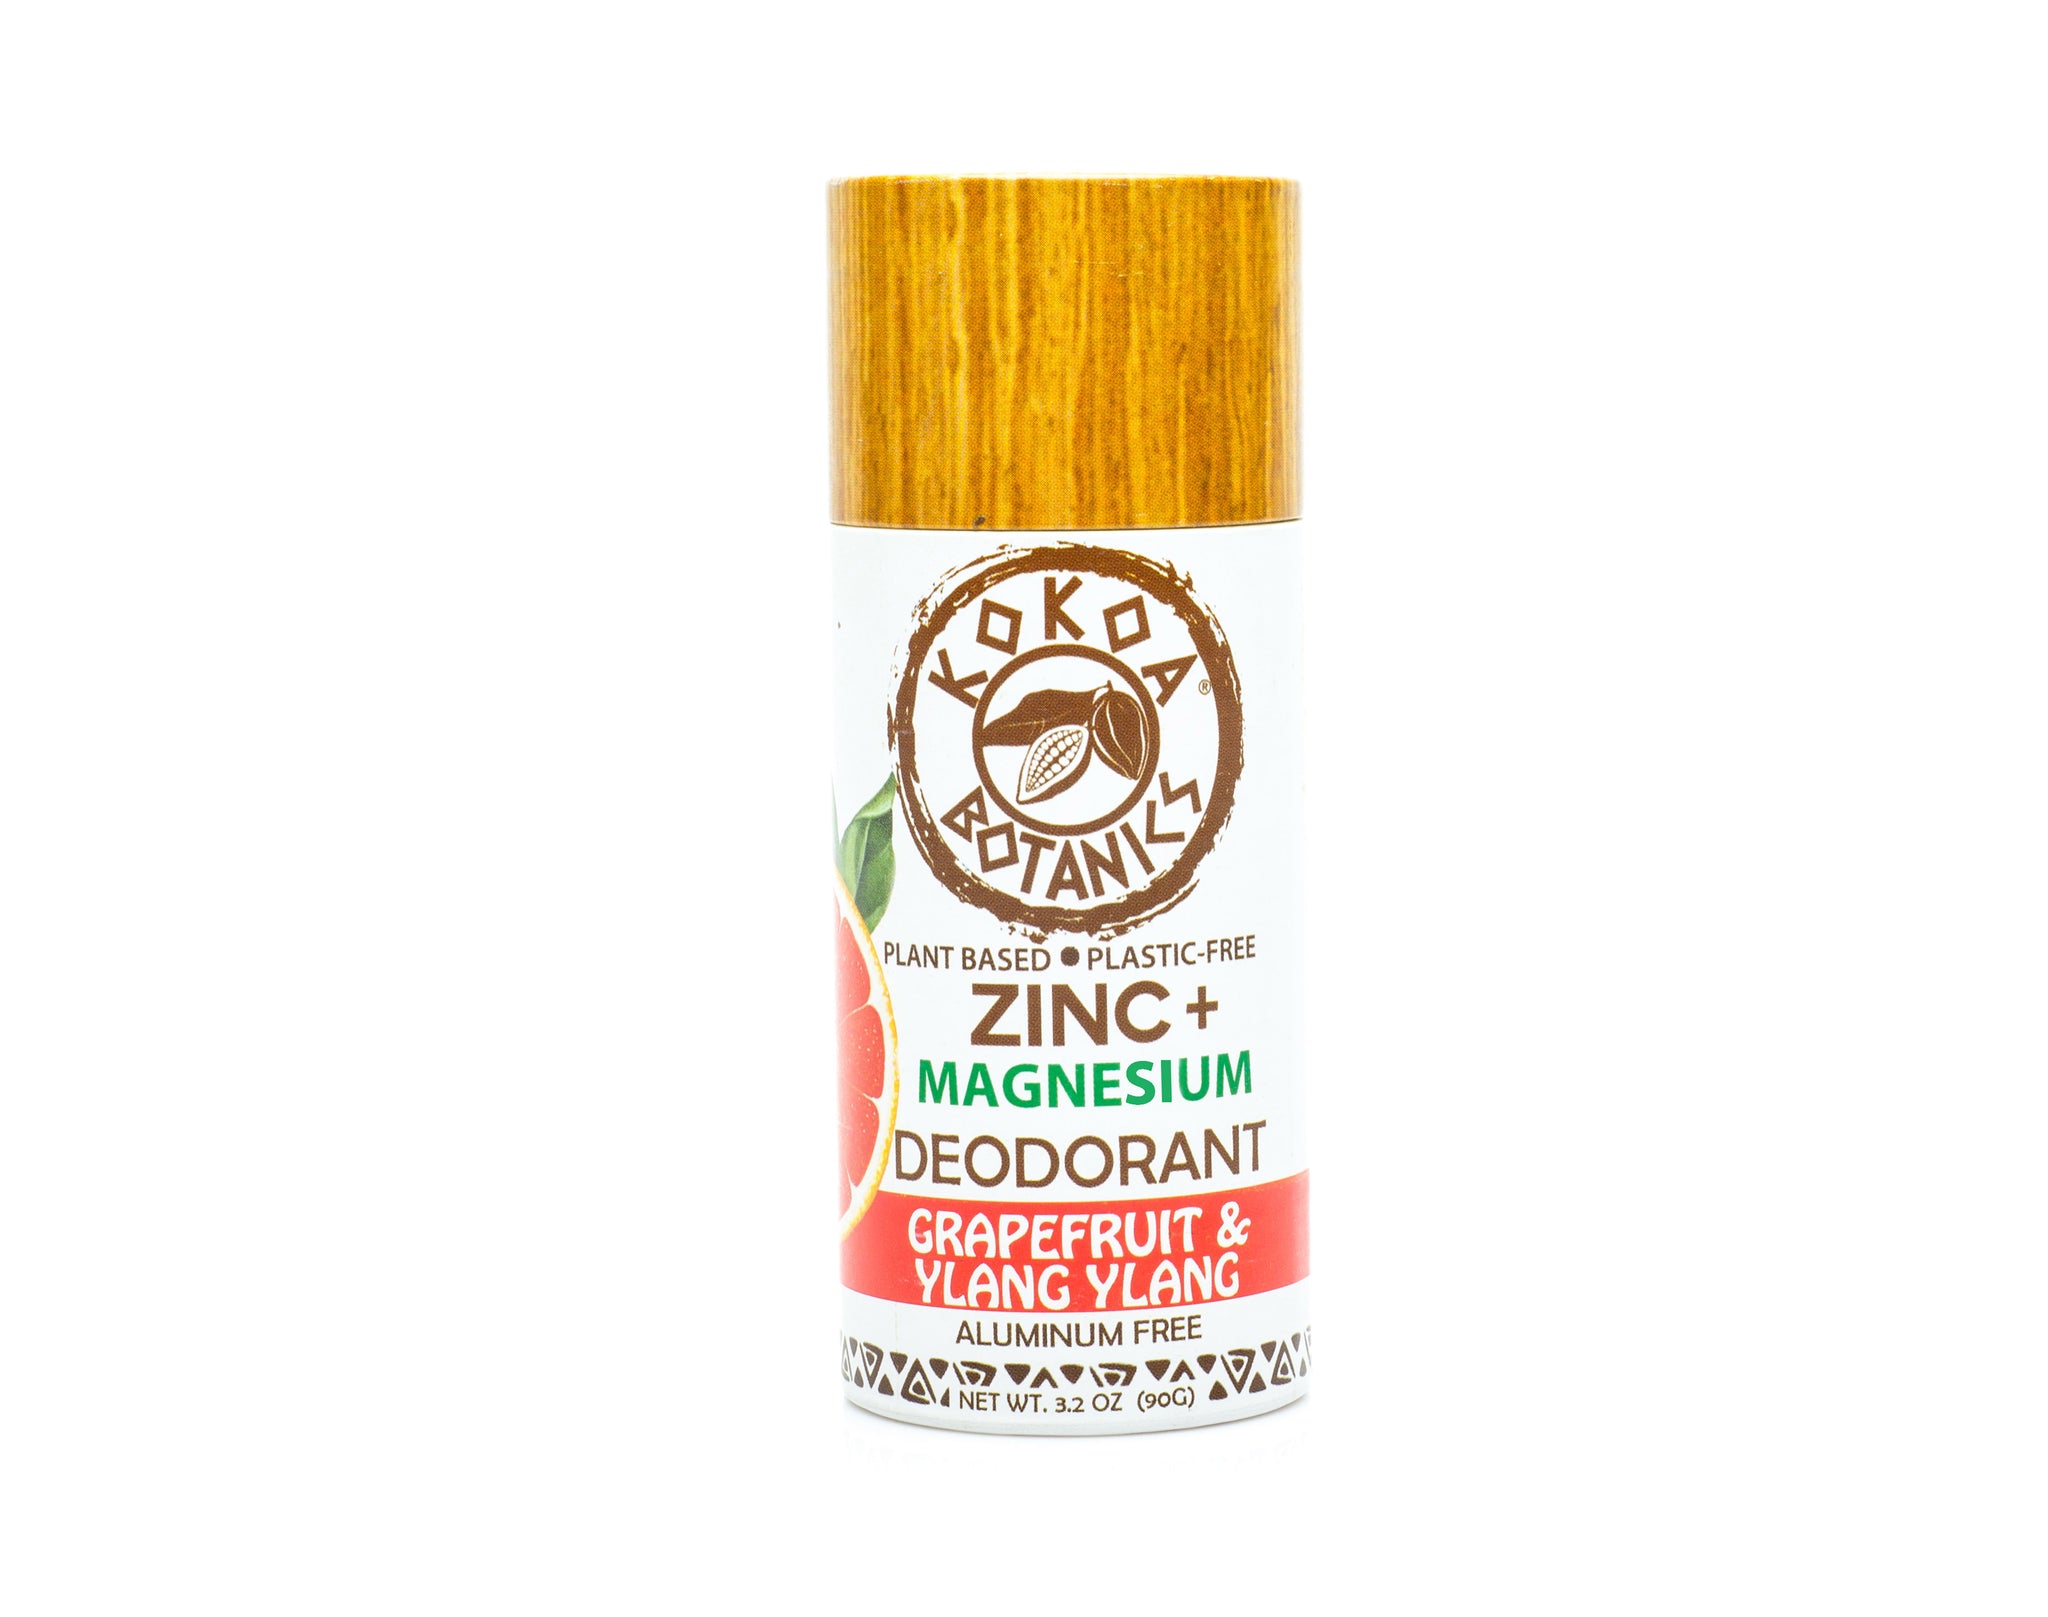 Grapefruit and Ylang Ylang - Natural Magnesium and Zinc Deodorant - Sensitive Skin 3.2 oz